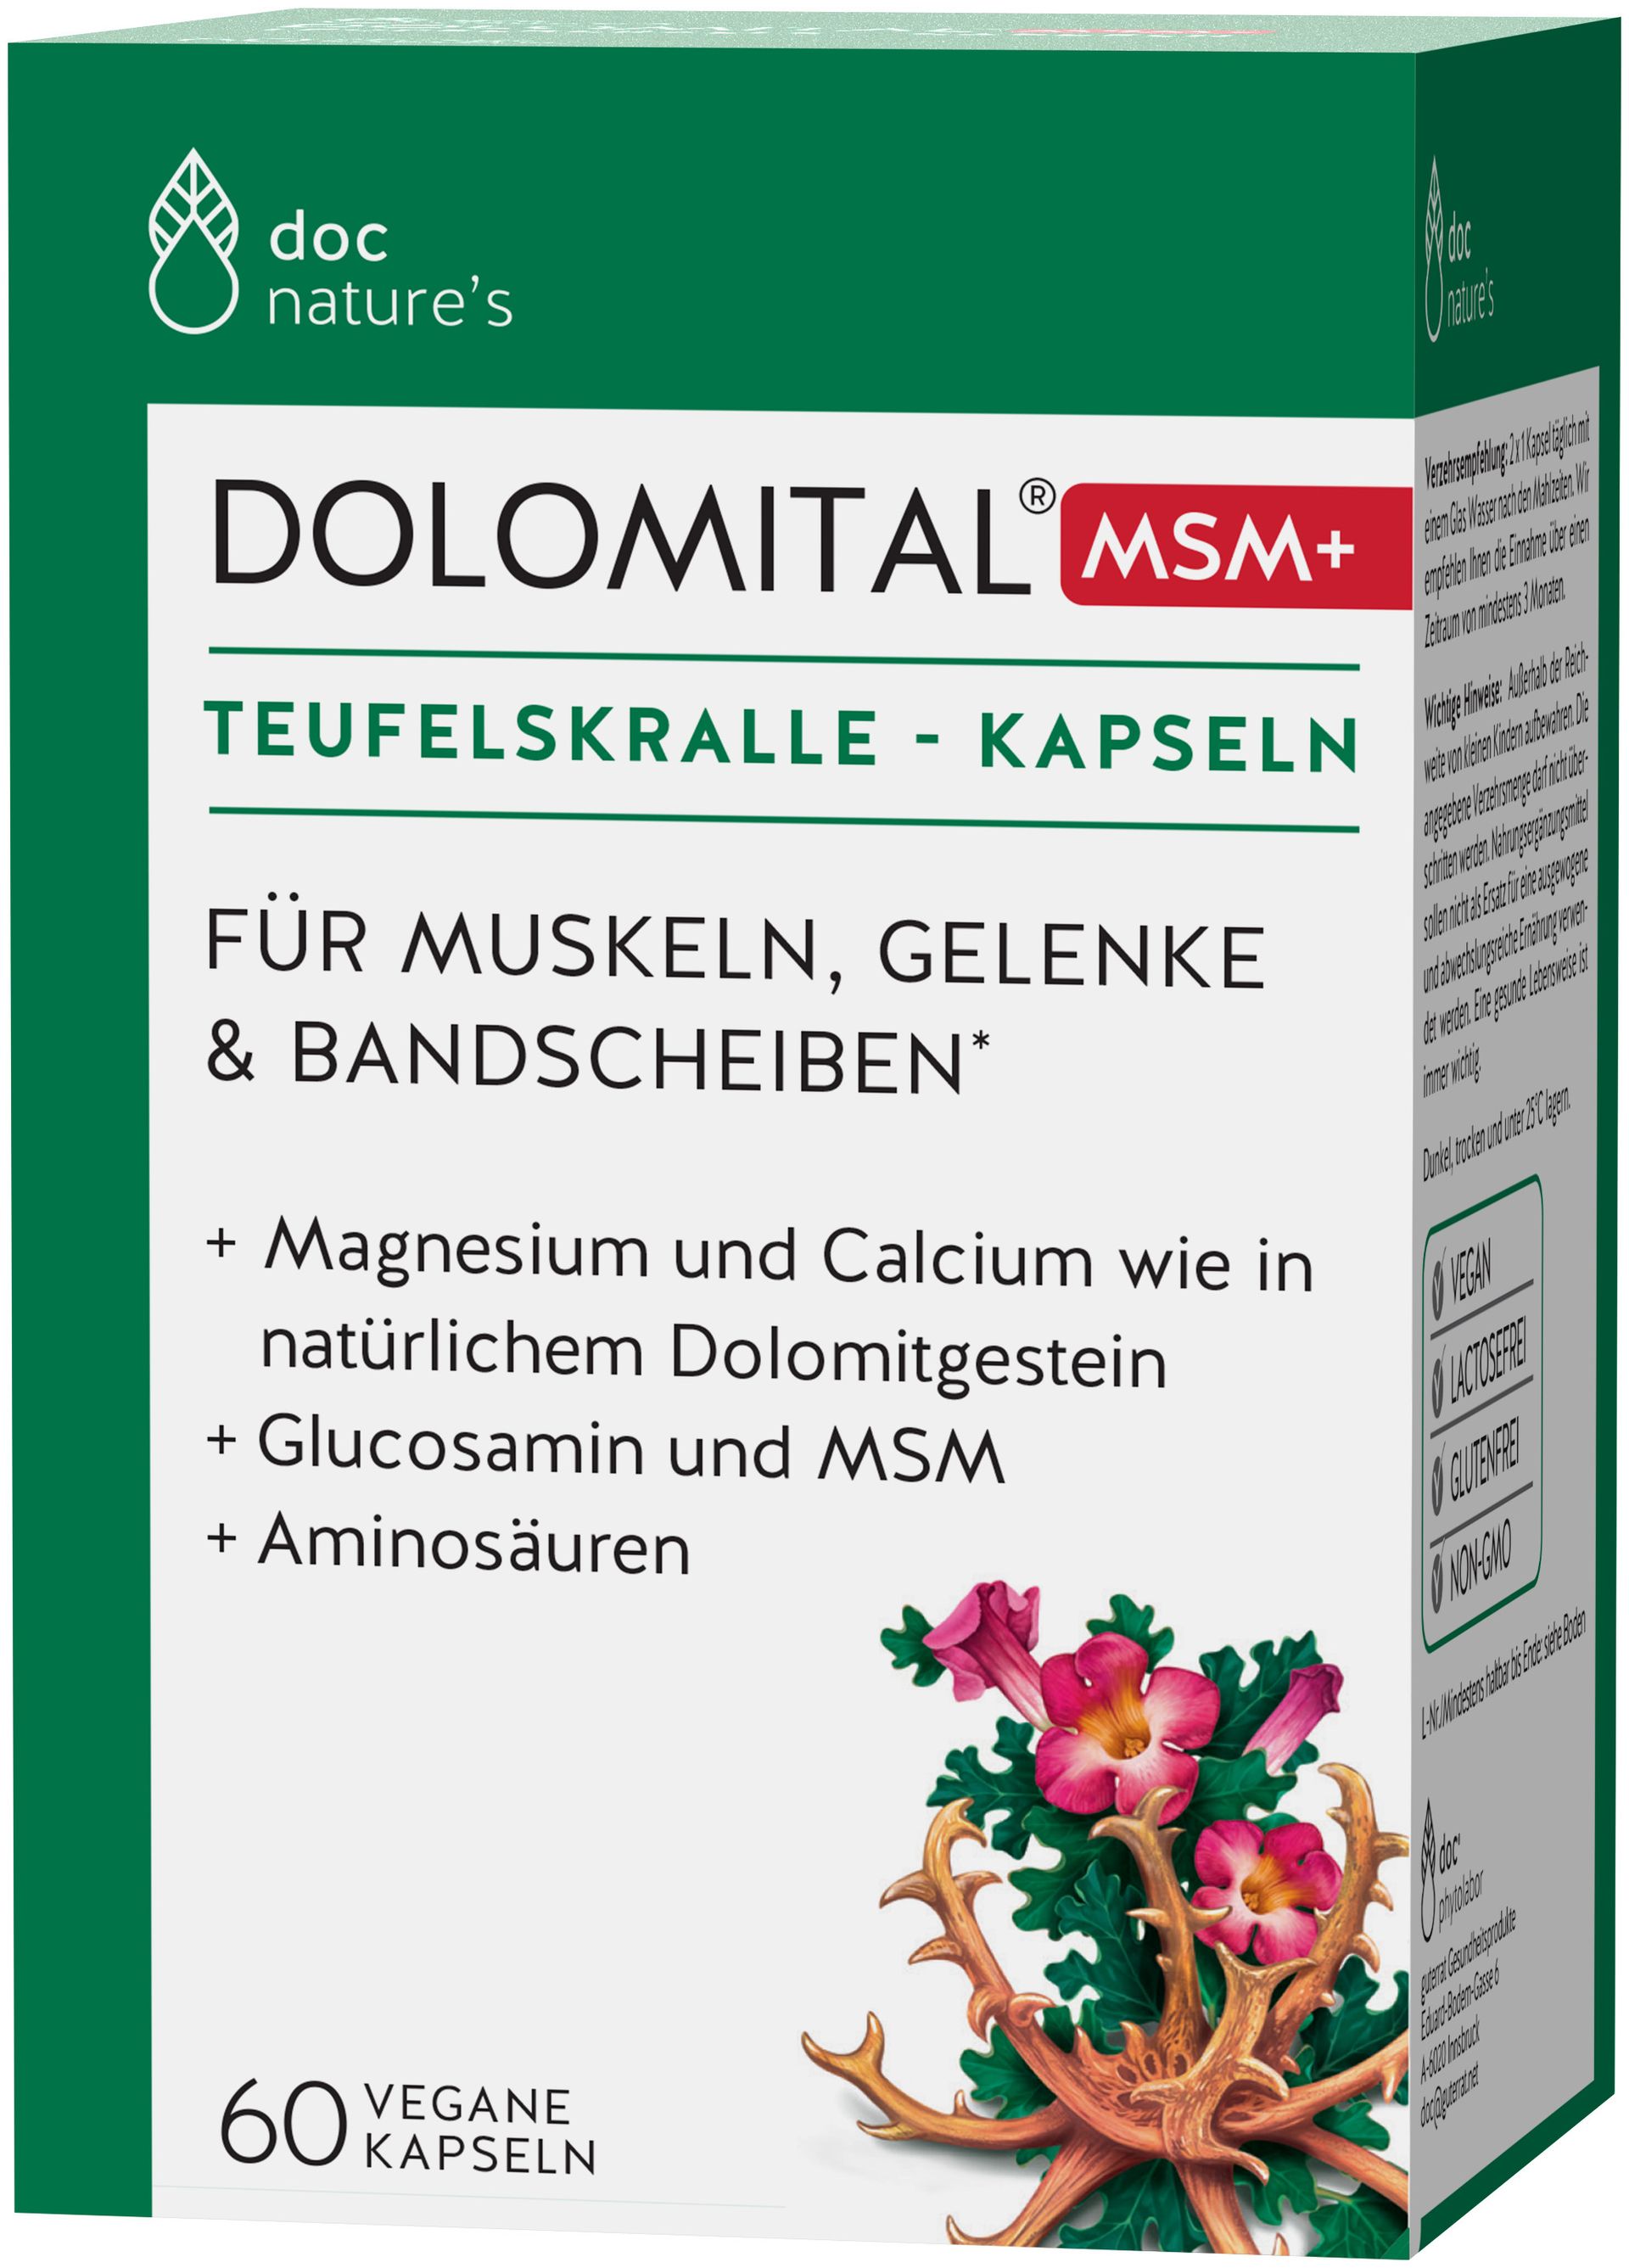 doc nature’s DOLOMITAL® MSM+